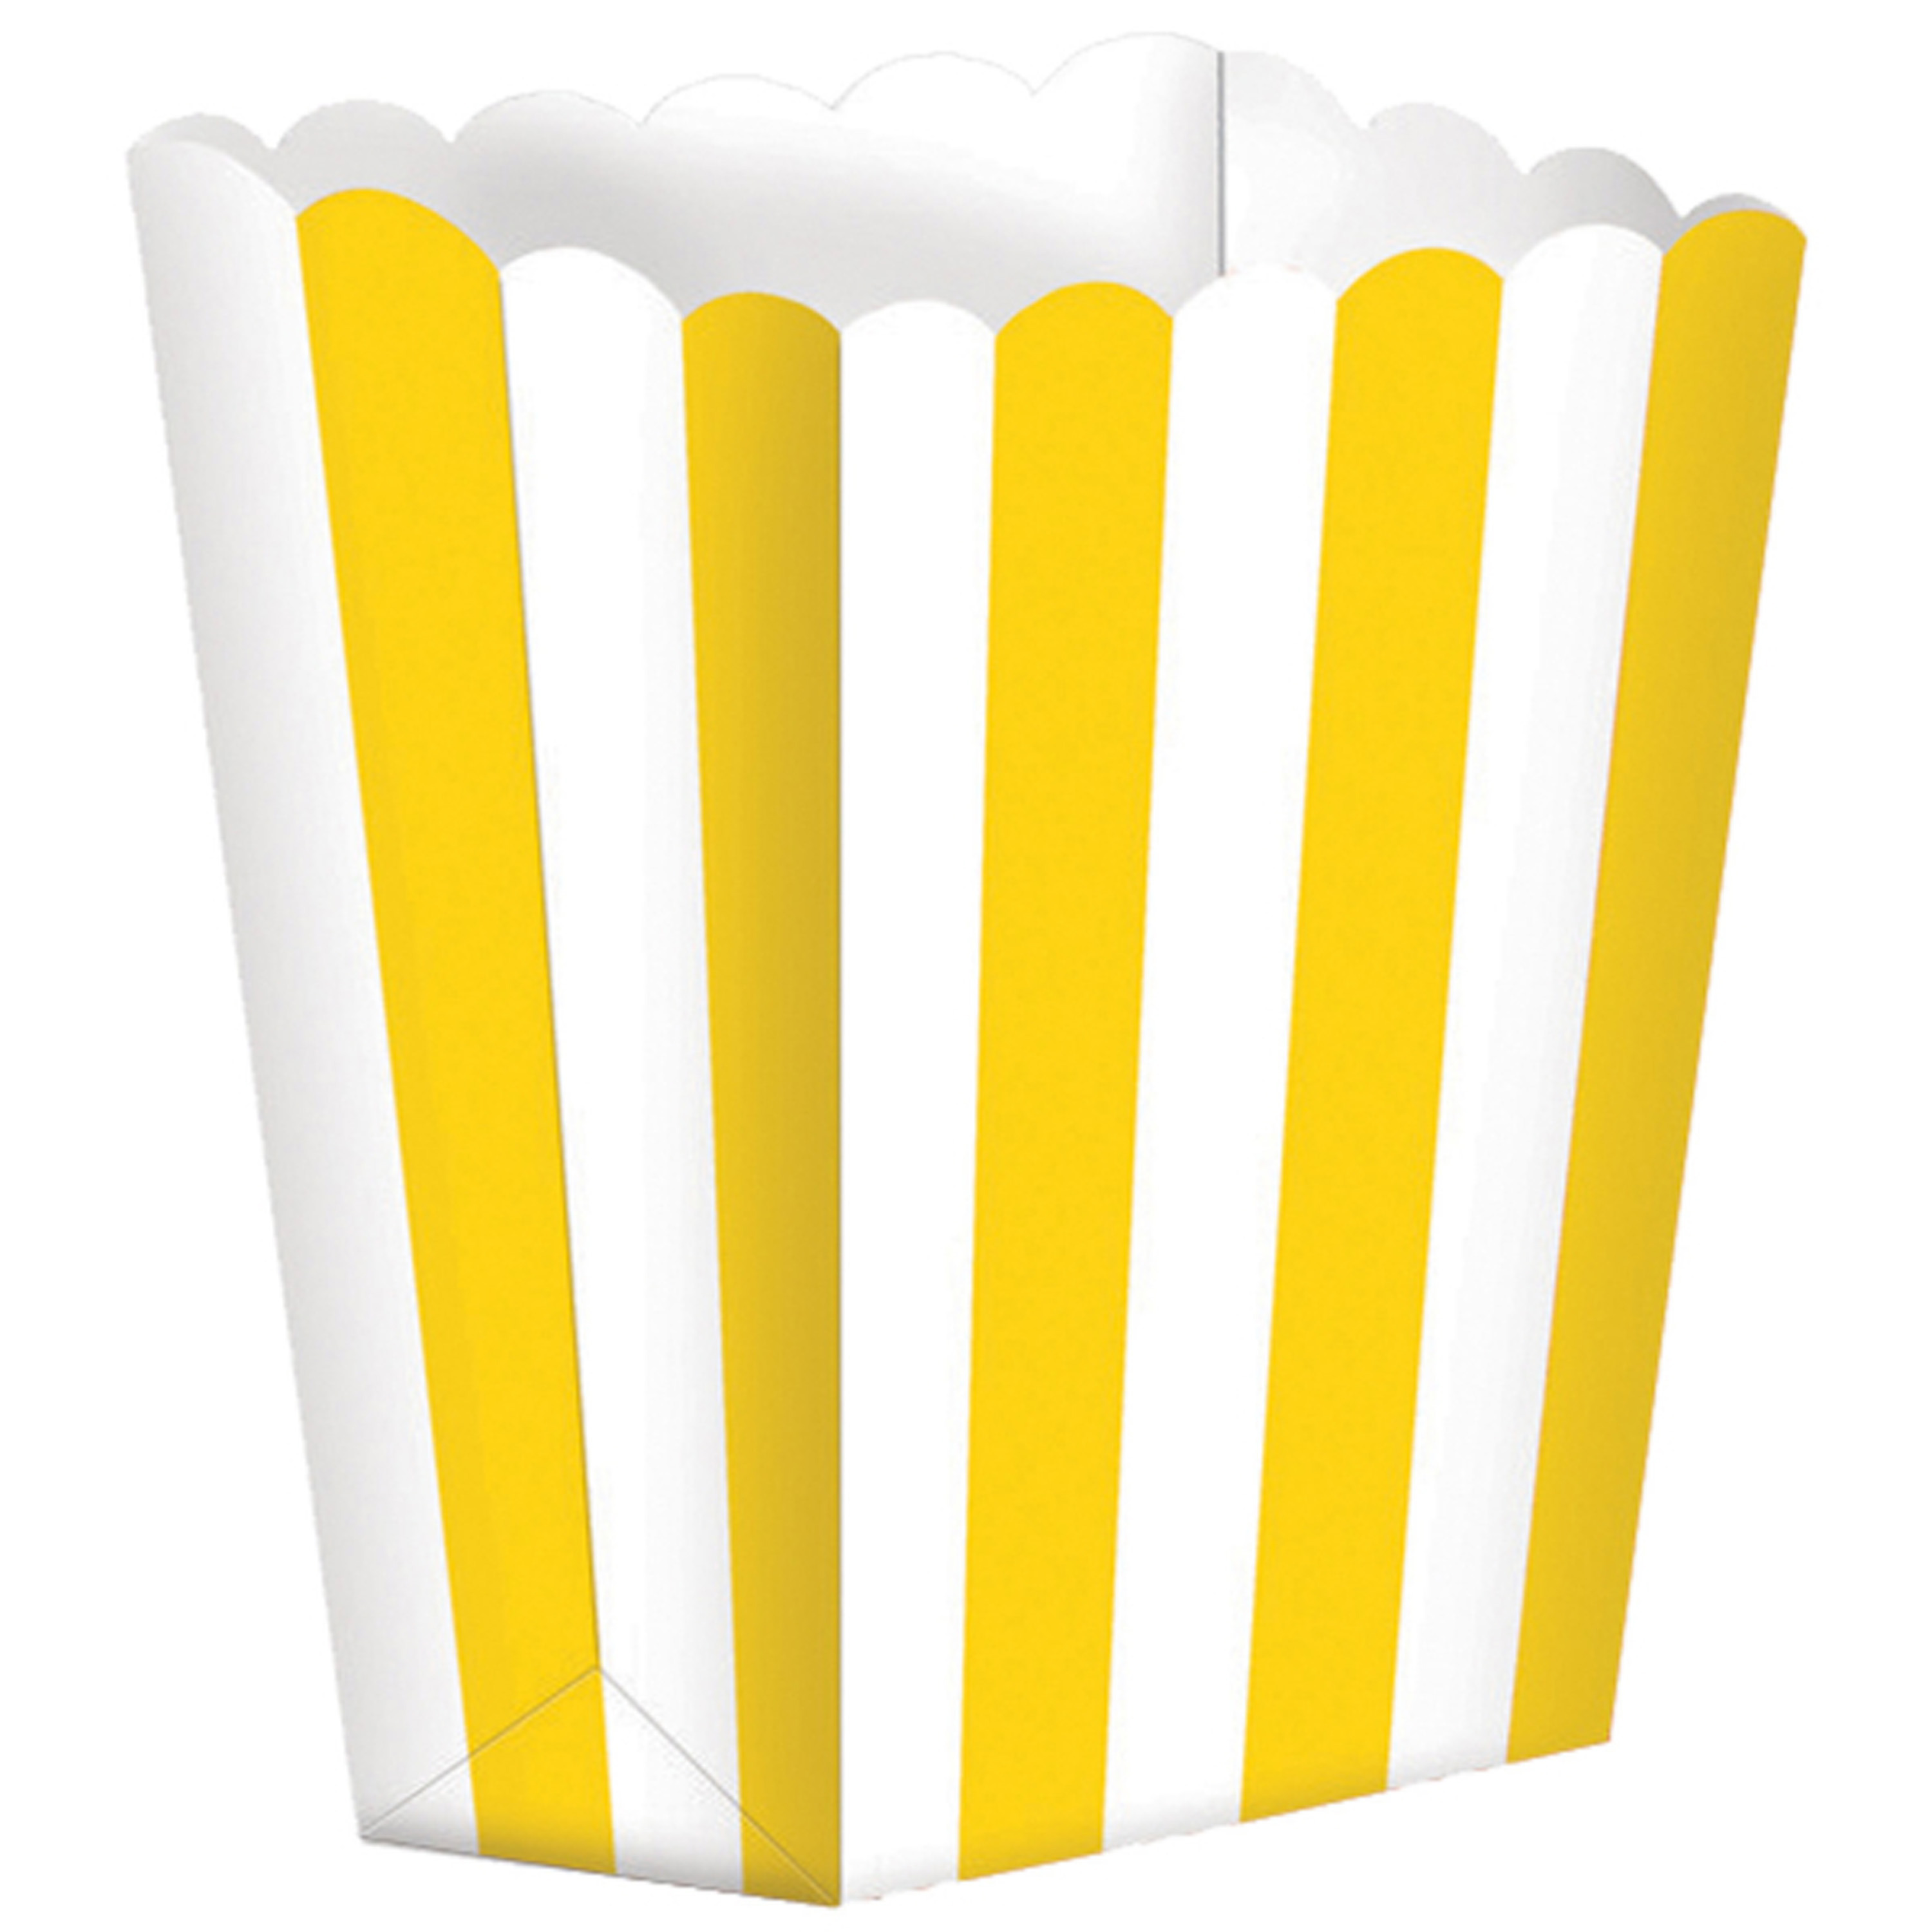 5x stuks Popcorn-snoep bakjes geel-wit